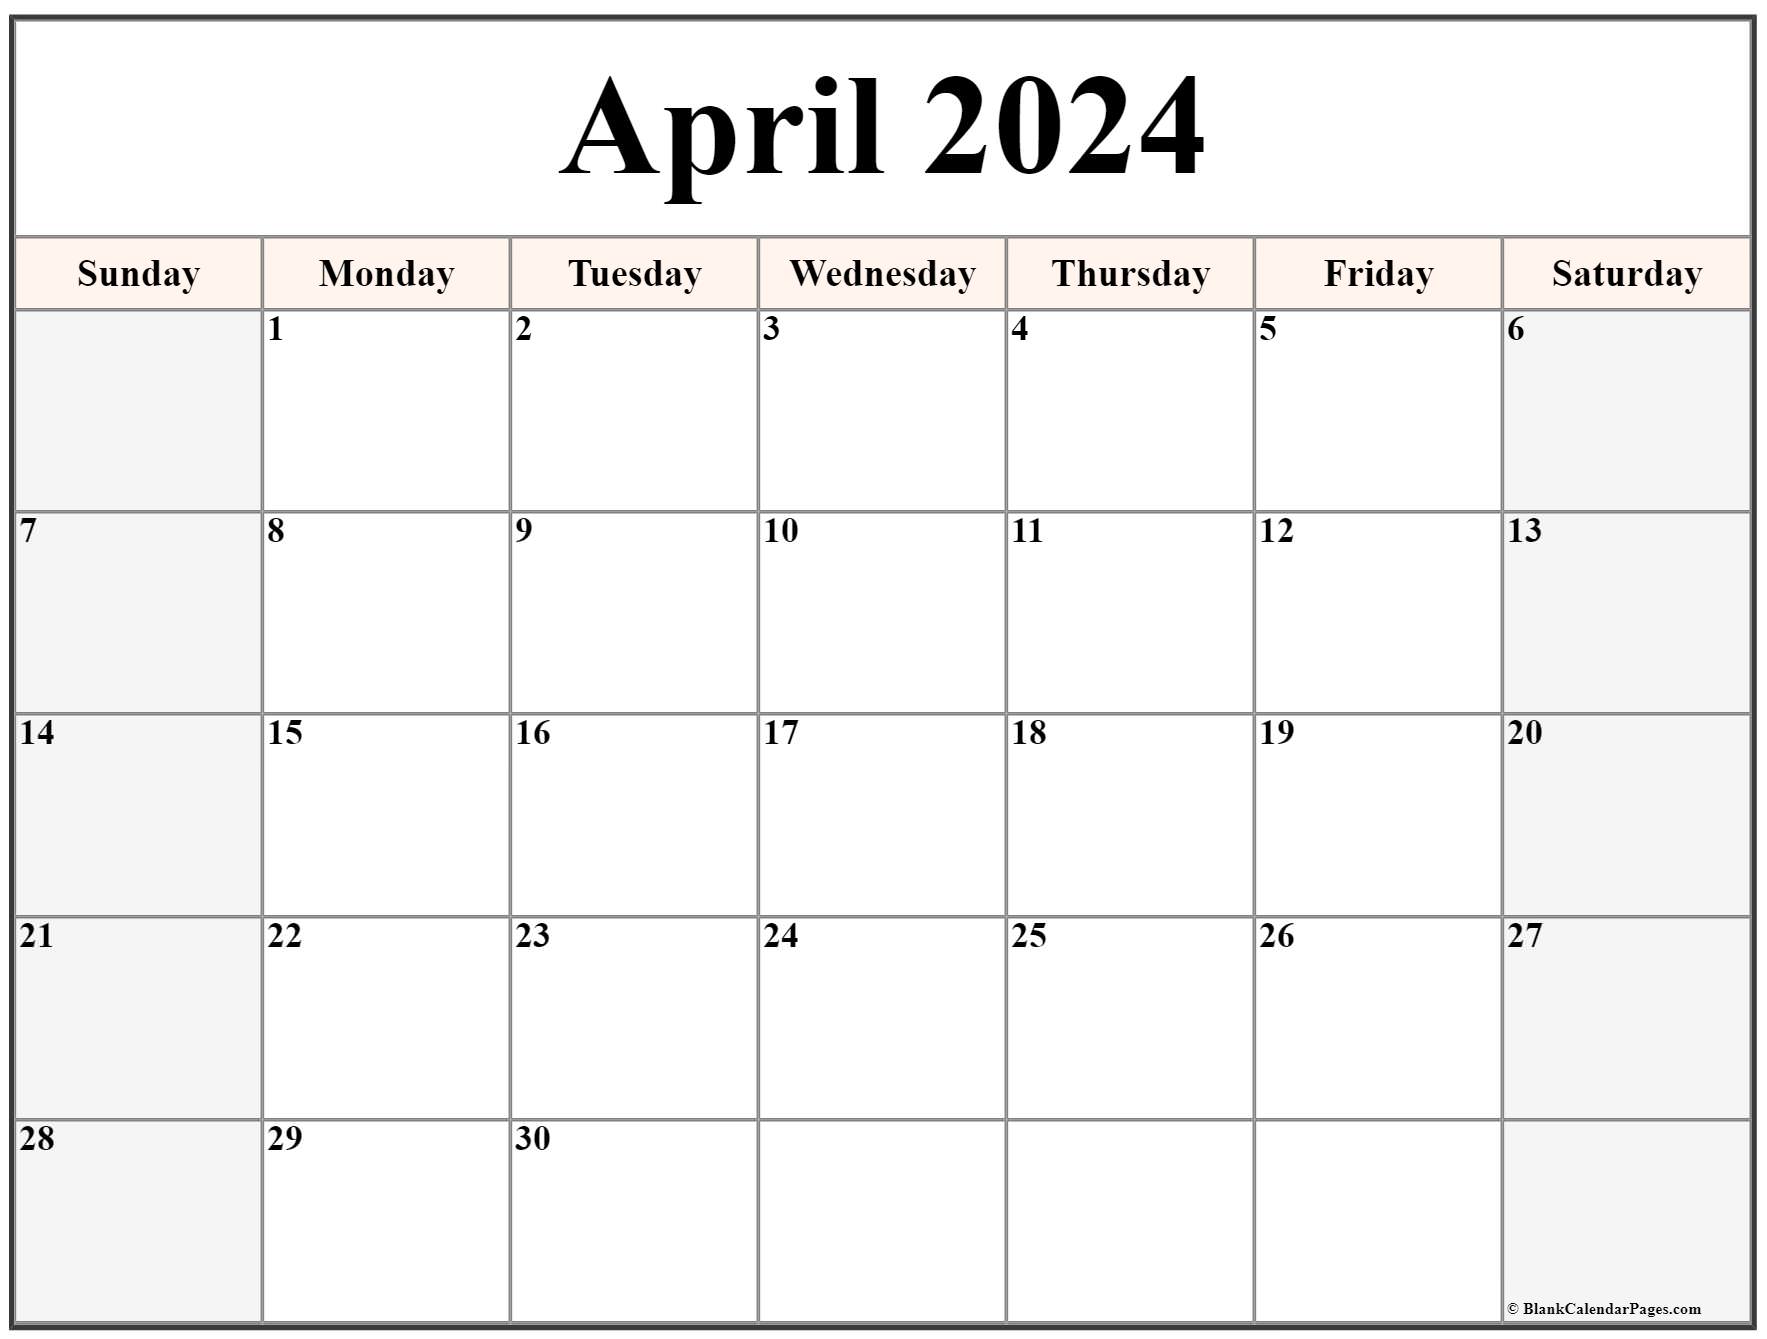 April 2024 calendar | free printable calendar